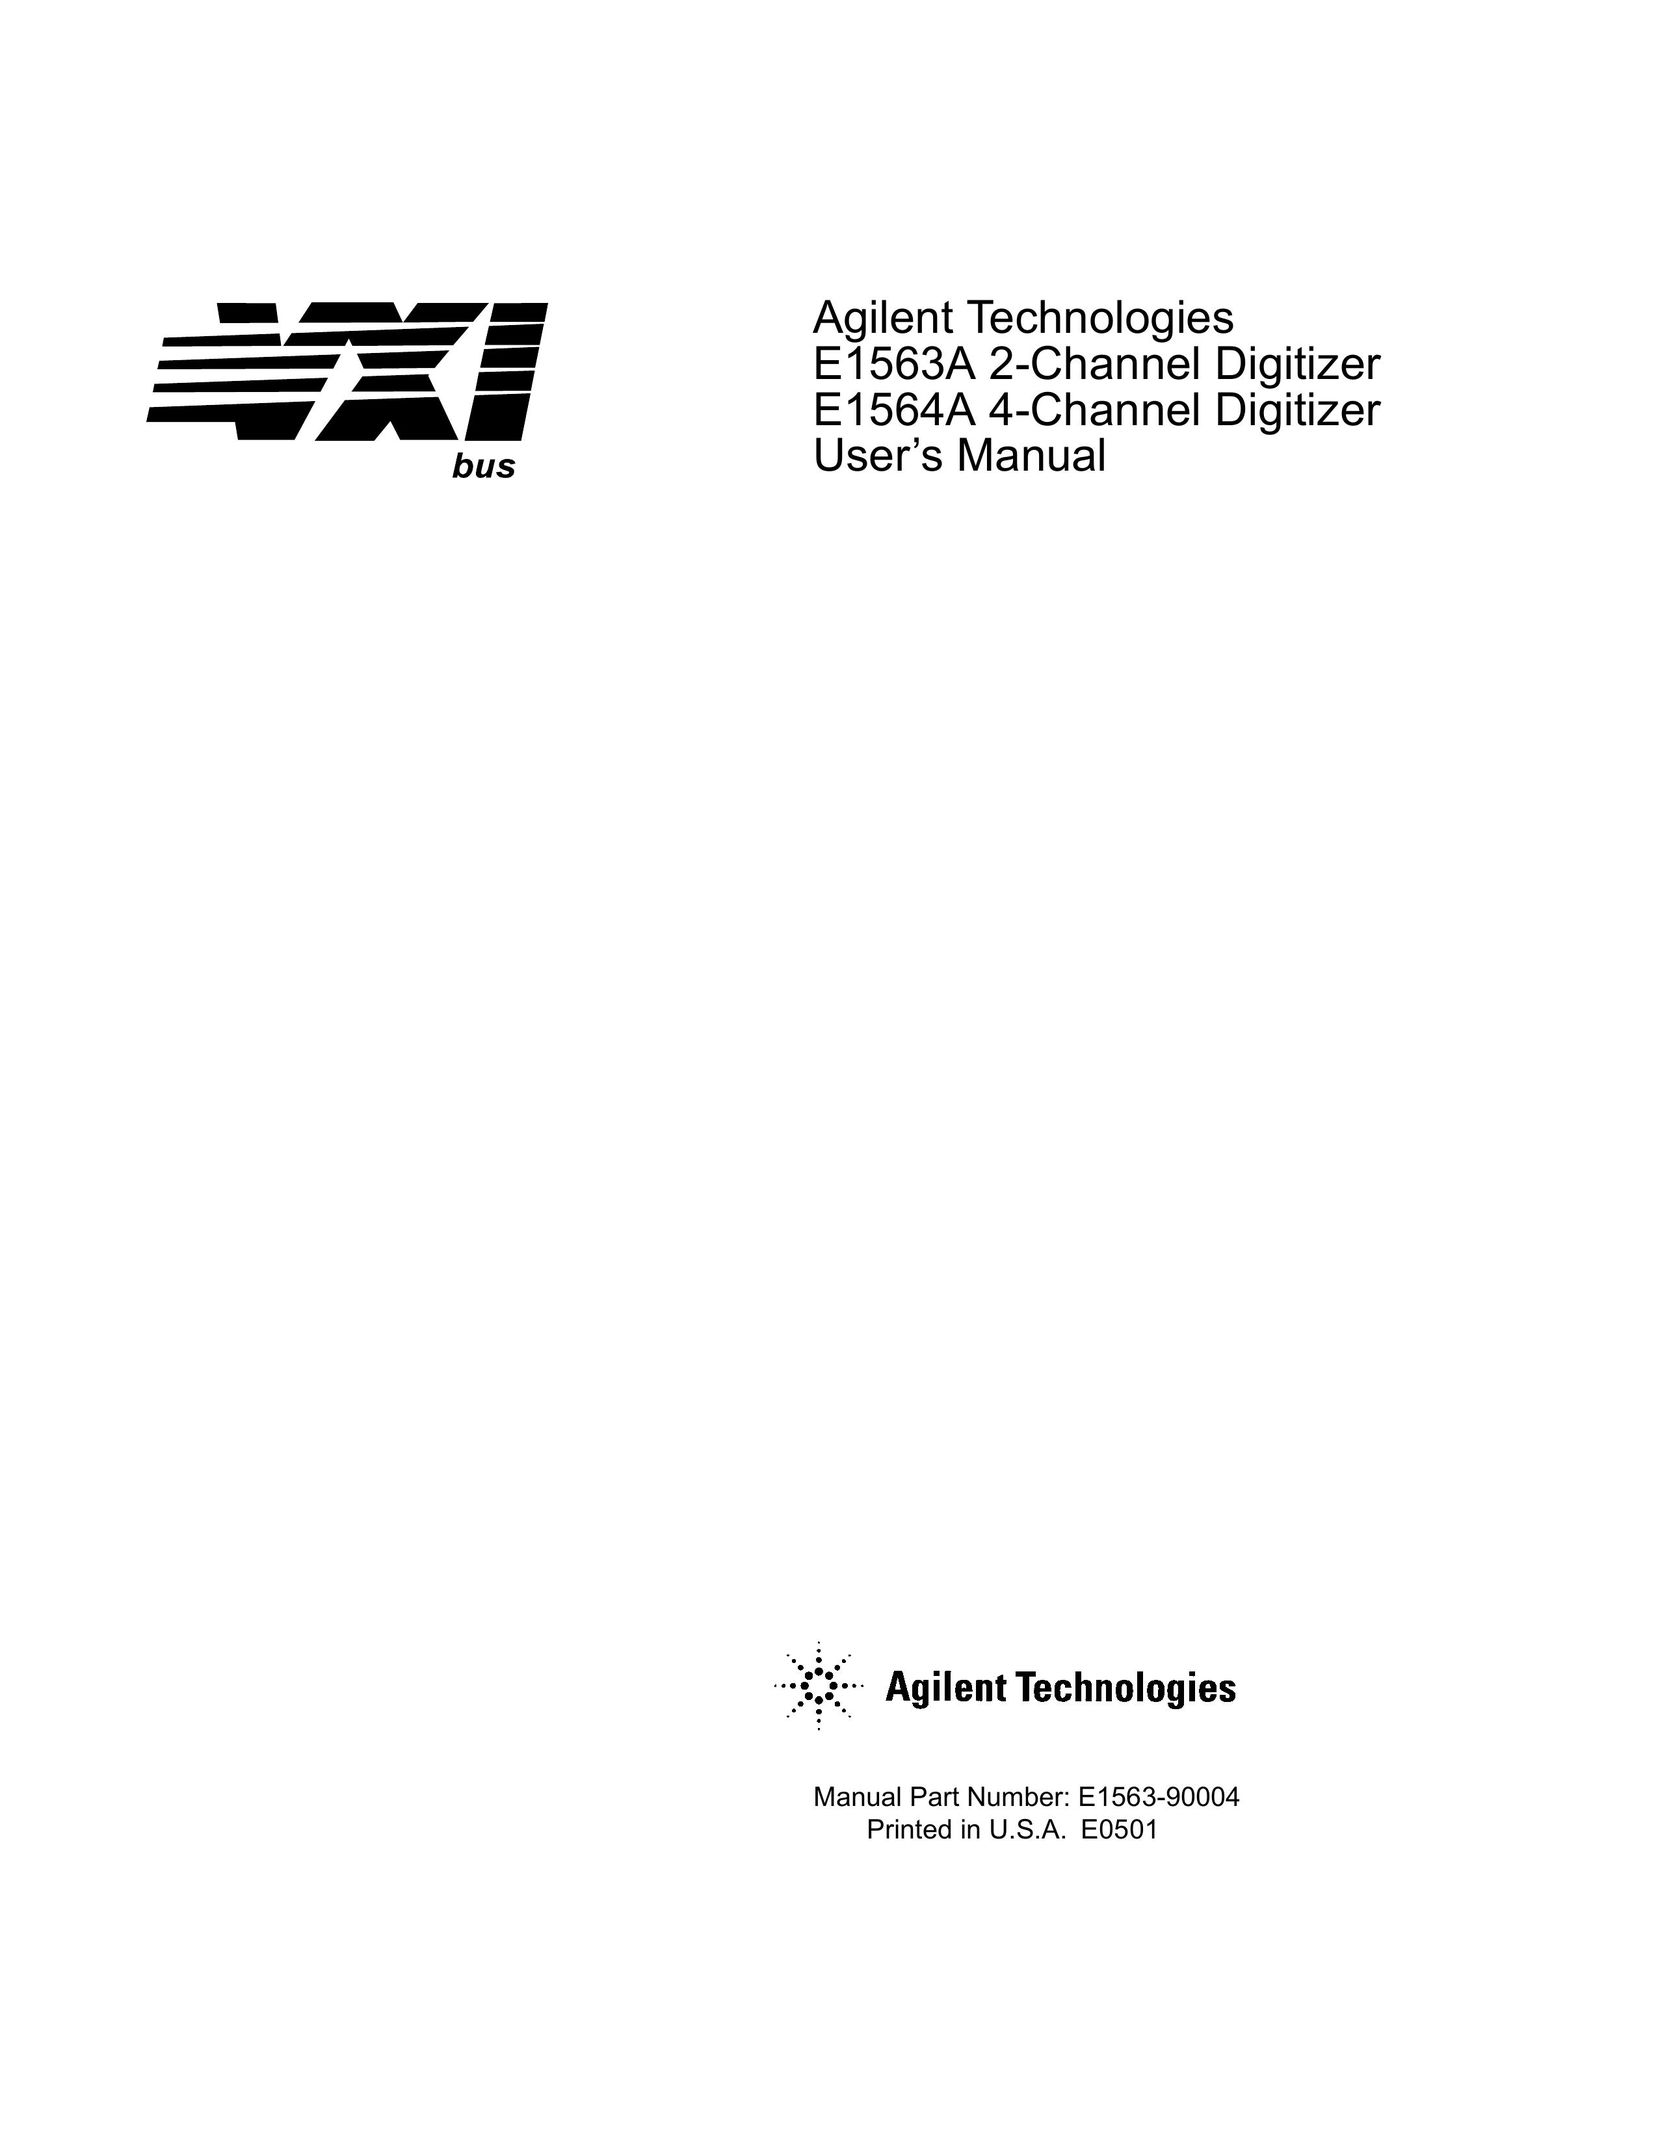 Agilent Technologies E1564A Stereo Receiver User Manual